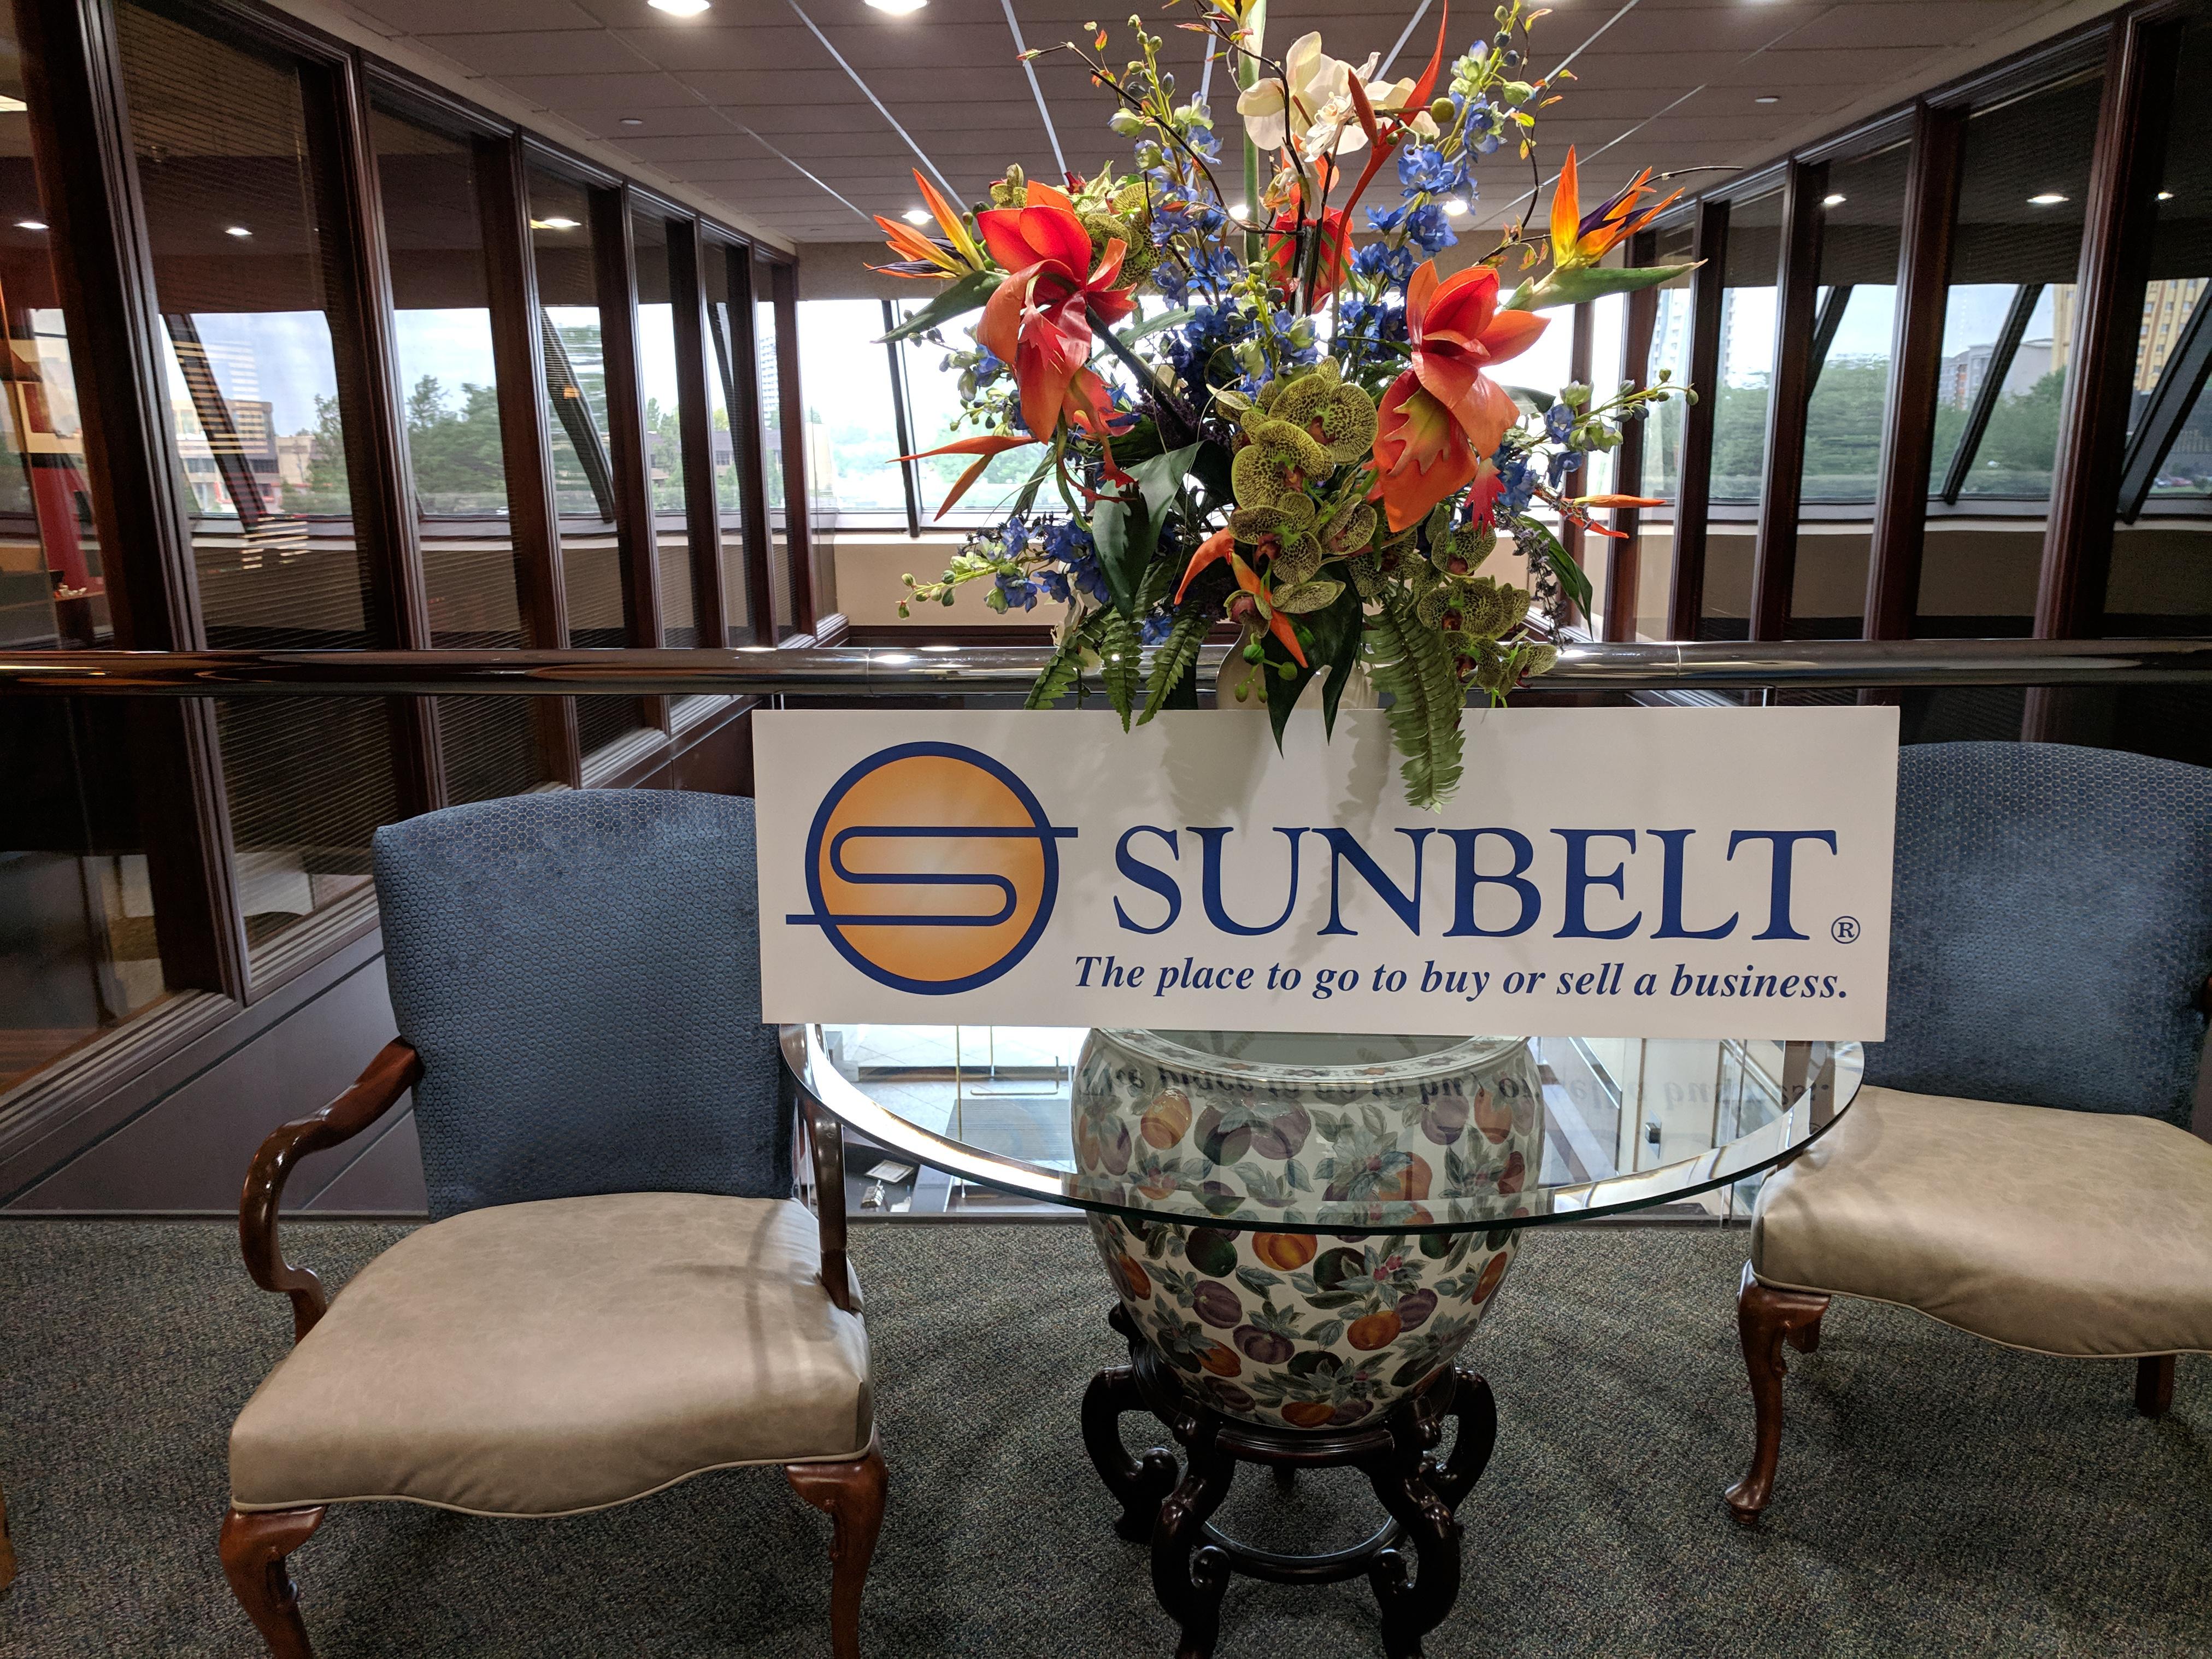 Sunbelt Business Brokers of Oklahoma City Photo